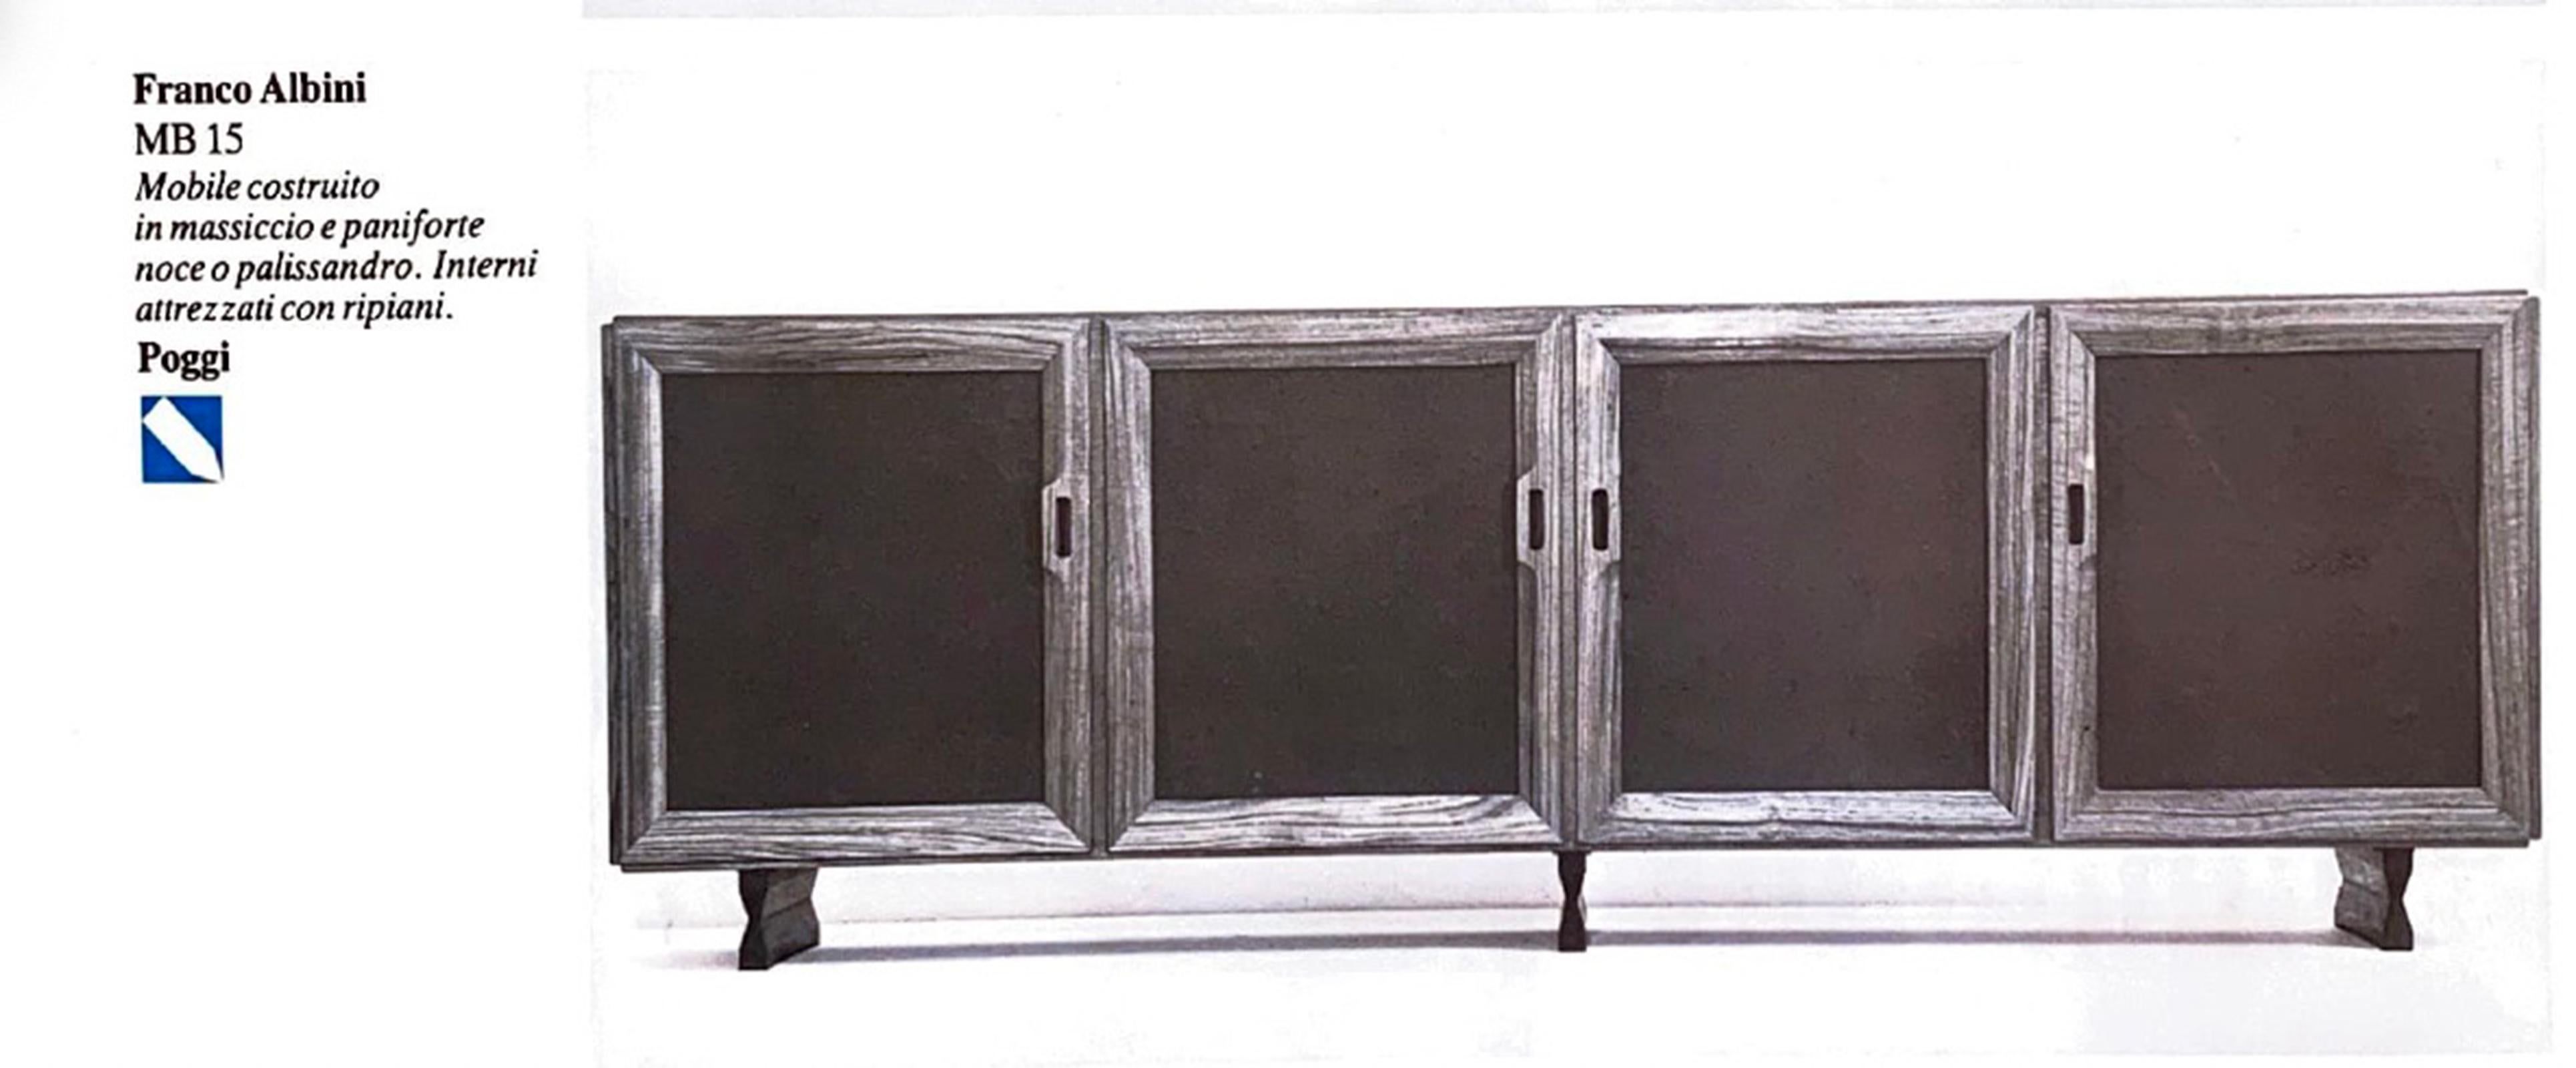 Franco Albini Stunning wood MB15 Sideboard for Poggi, Italian Design 1950s For Sale 4